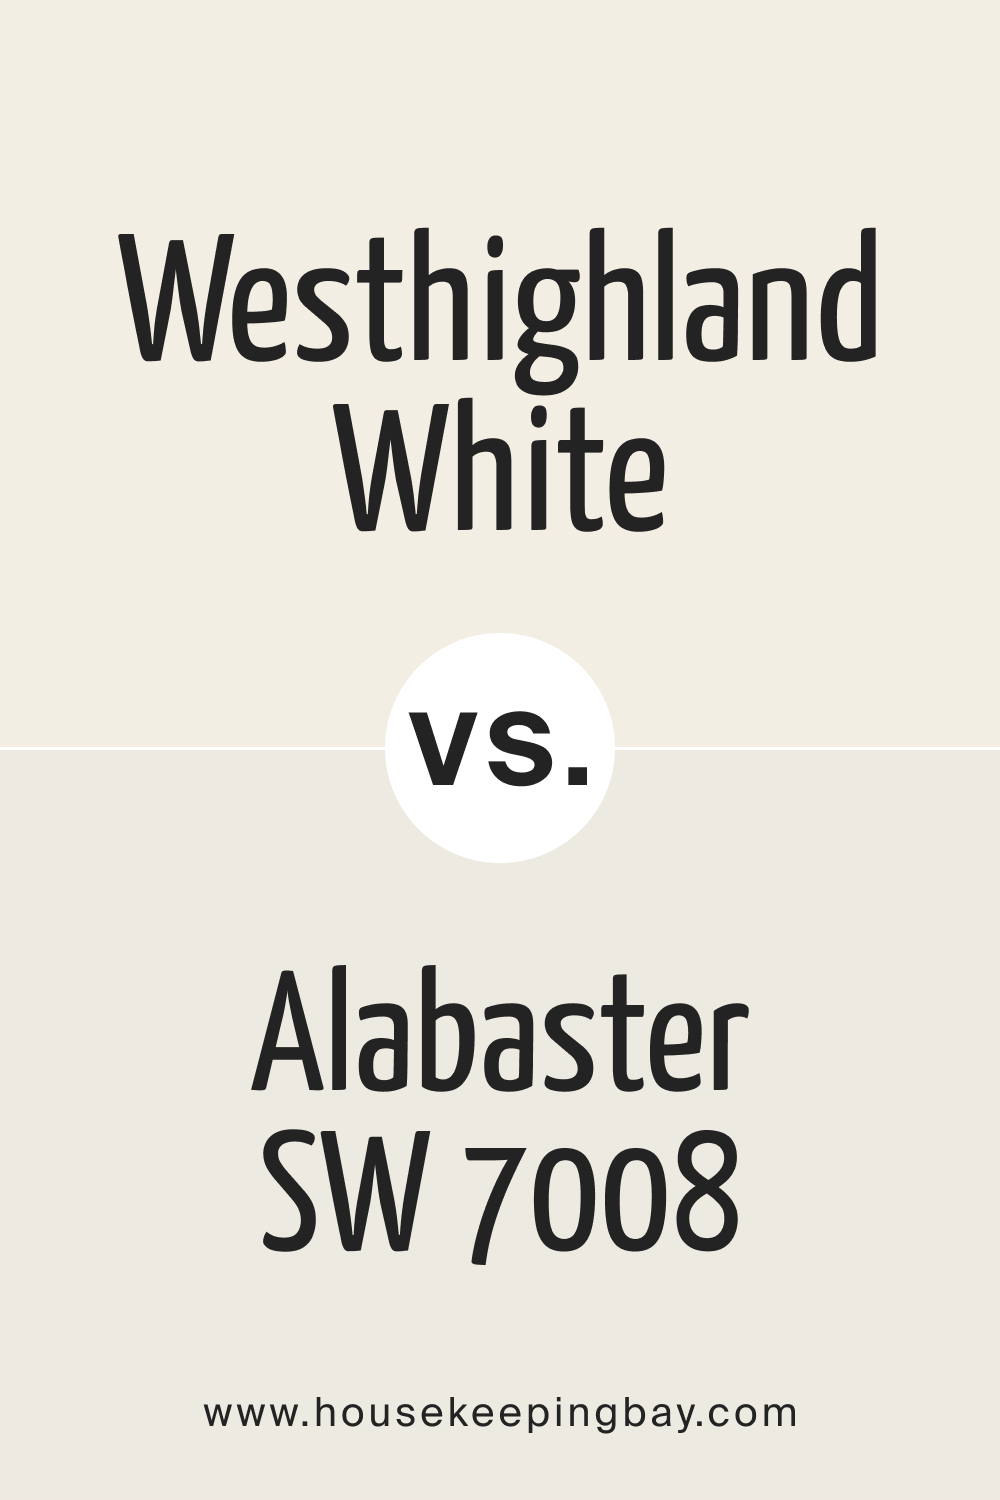 Westhighland White SW 7566 vs Alabaster SW 7008